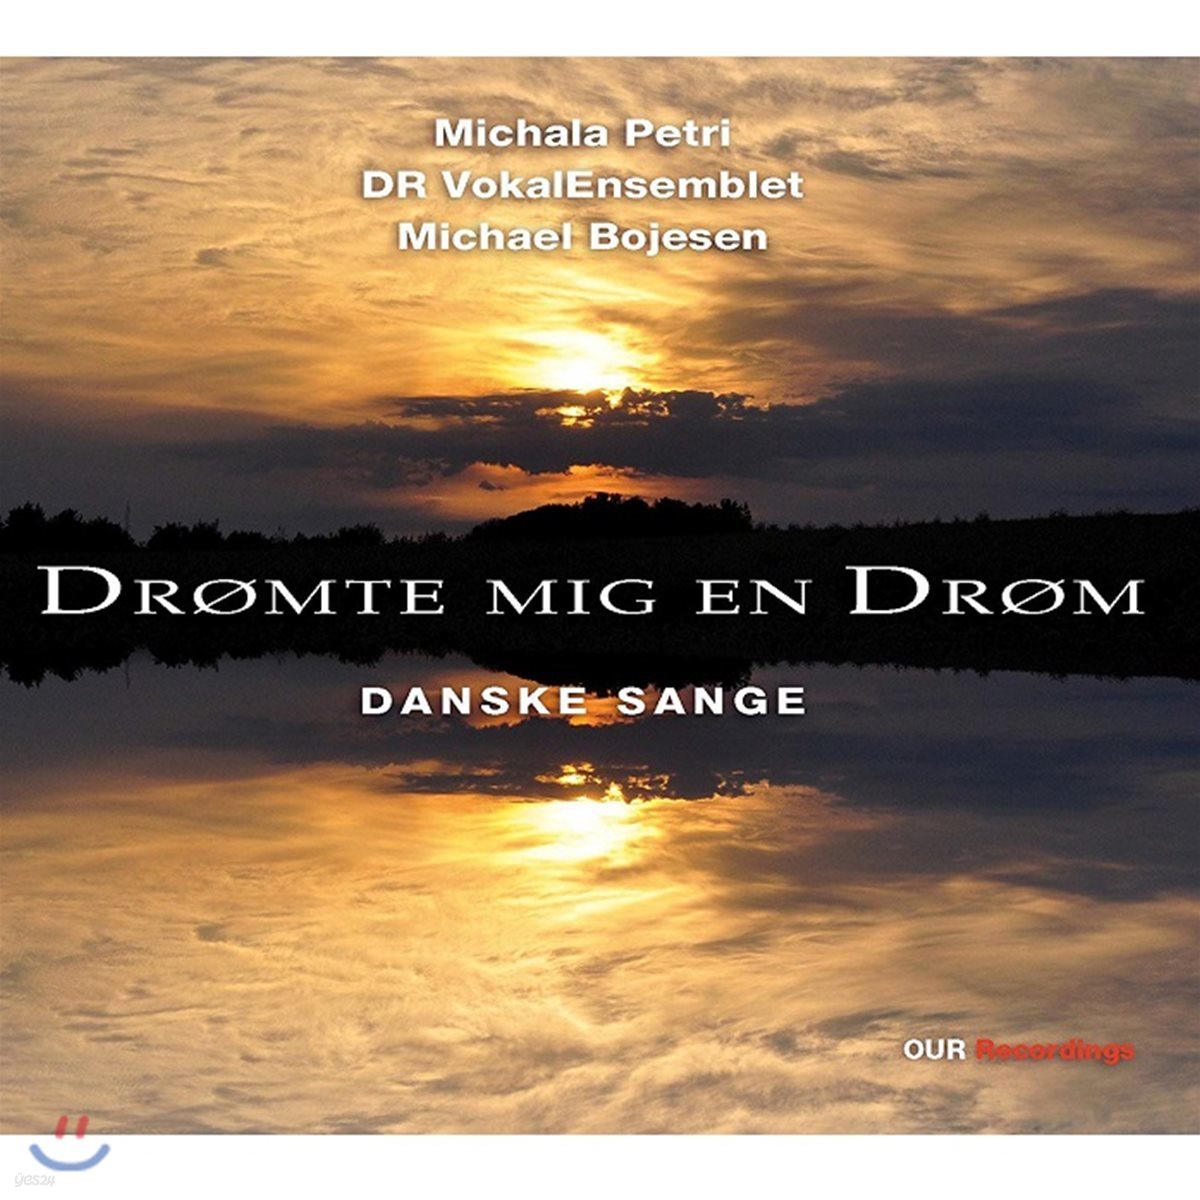 Danish National Vocal Ensemble 덴마크의 민속음악 (Dromte mig en drom: Danish Songs)